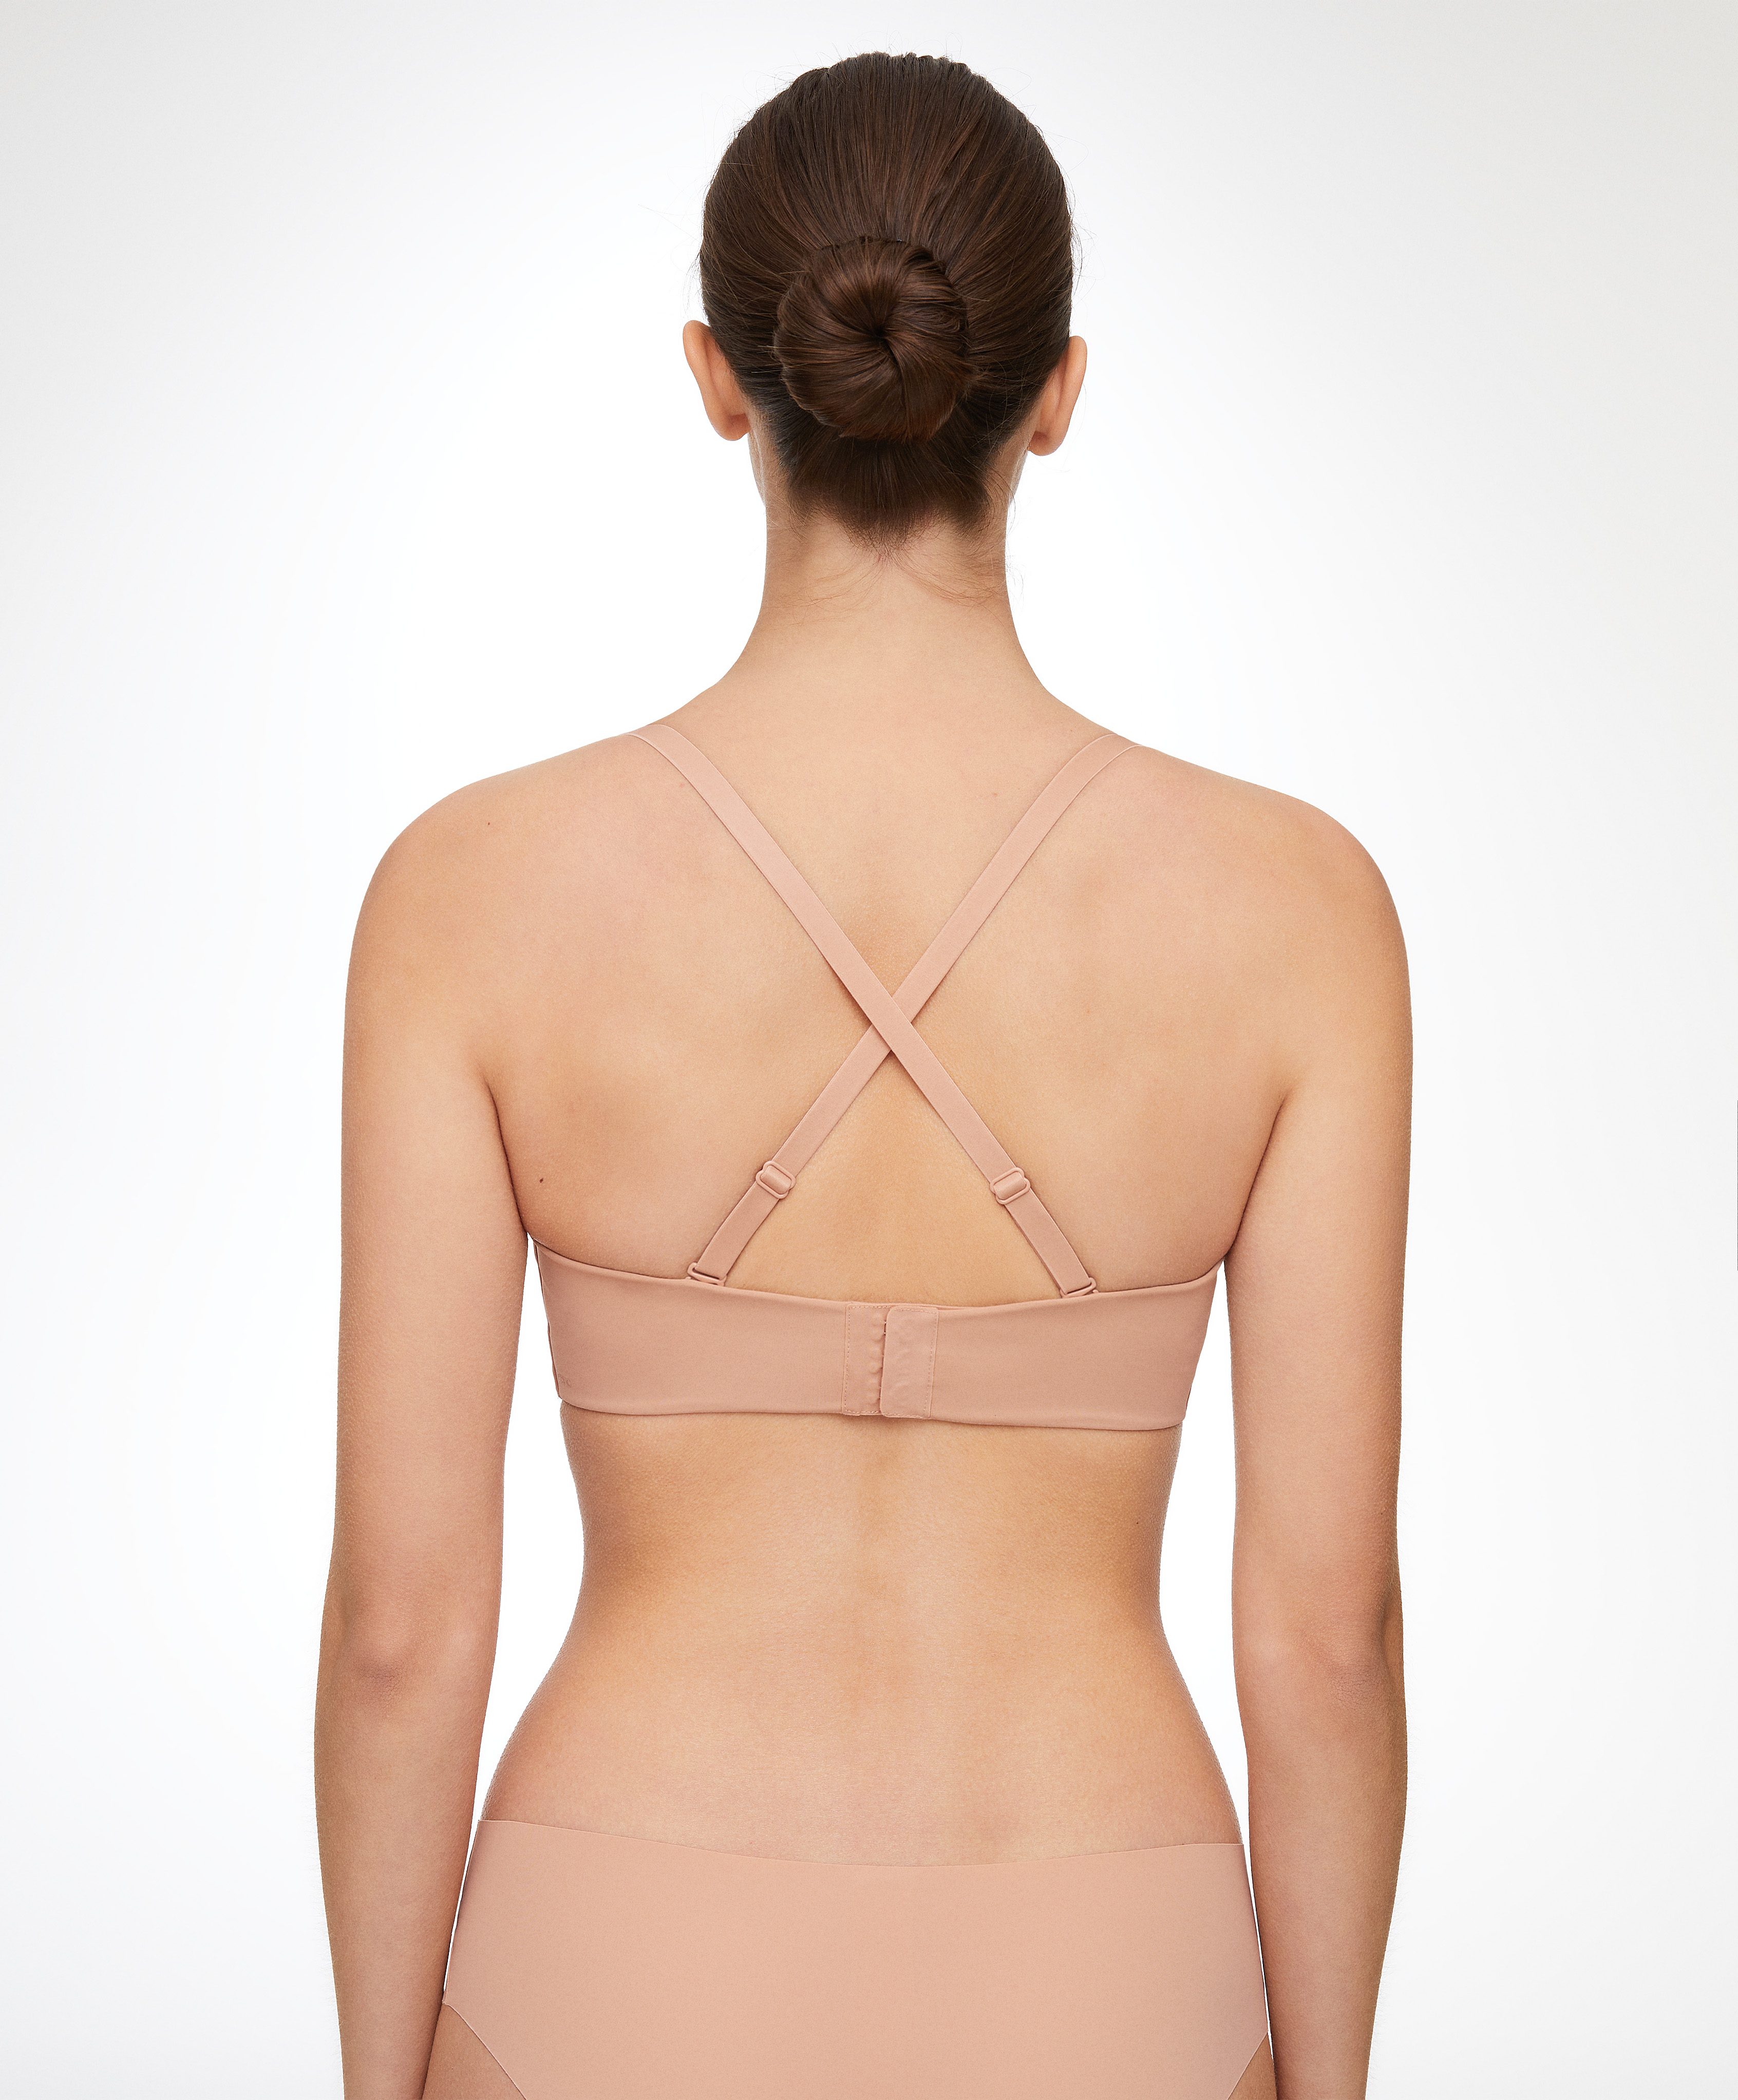 U-neck bra with removable straps